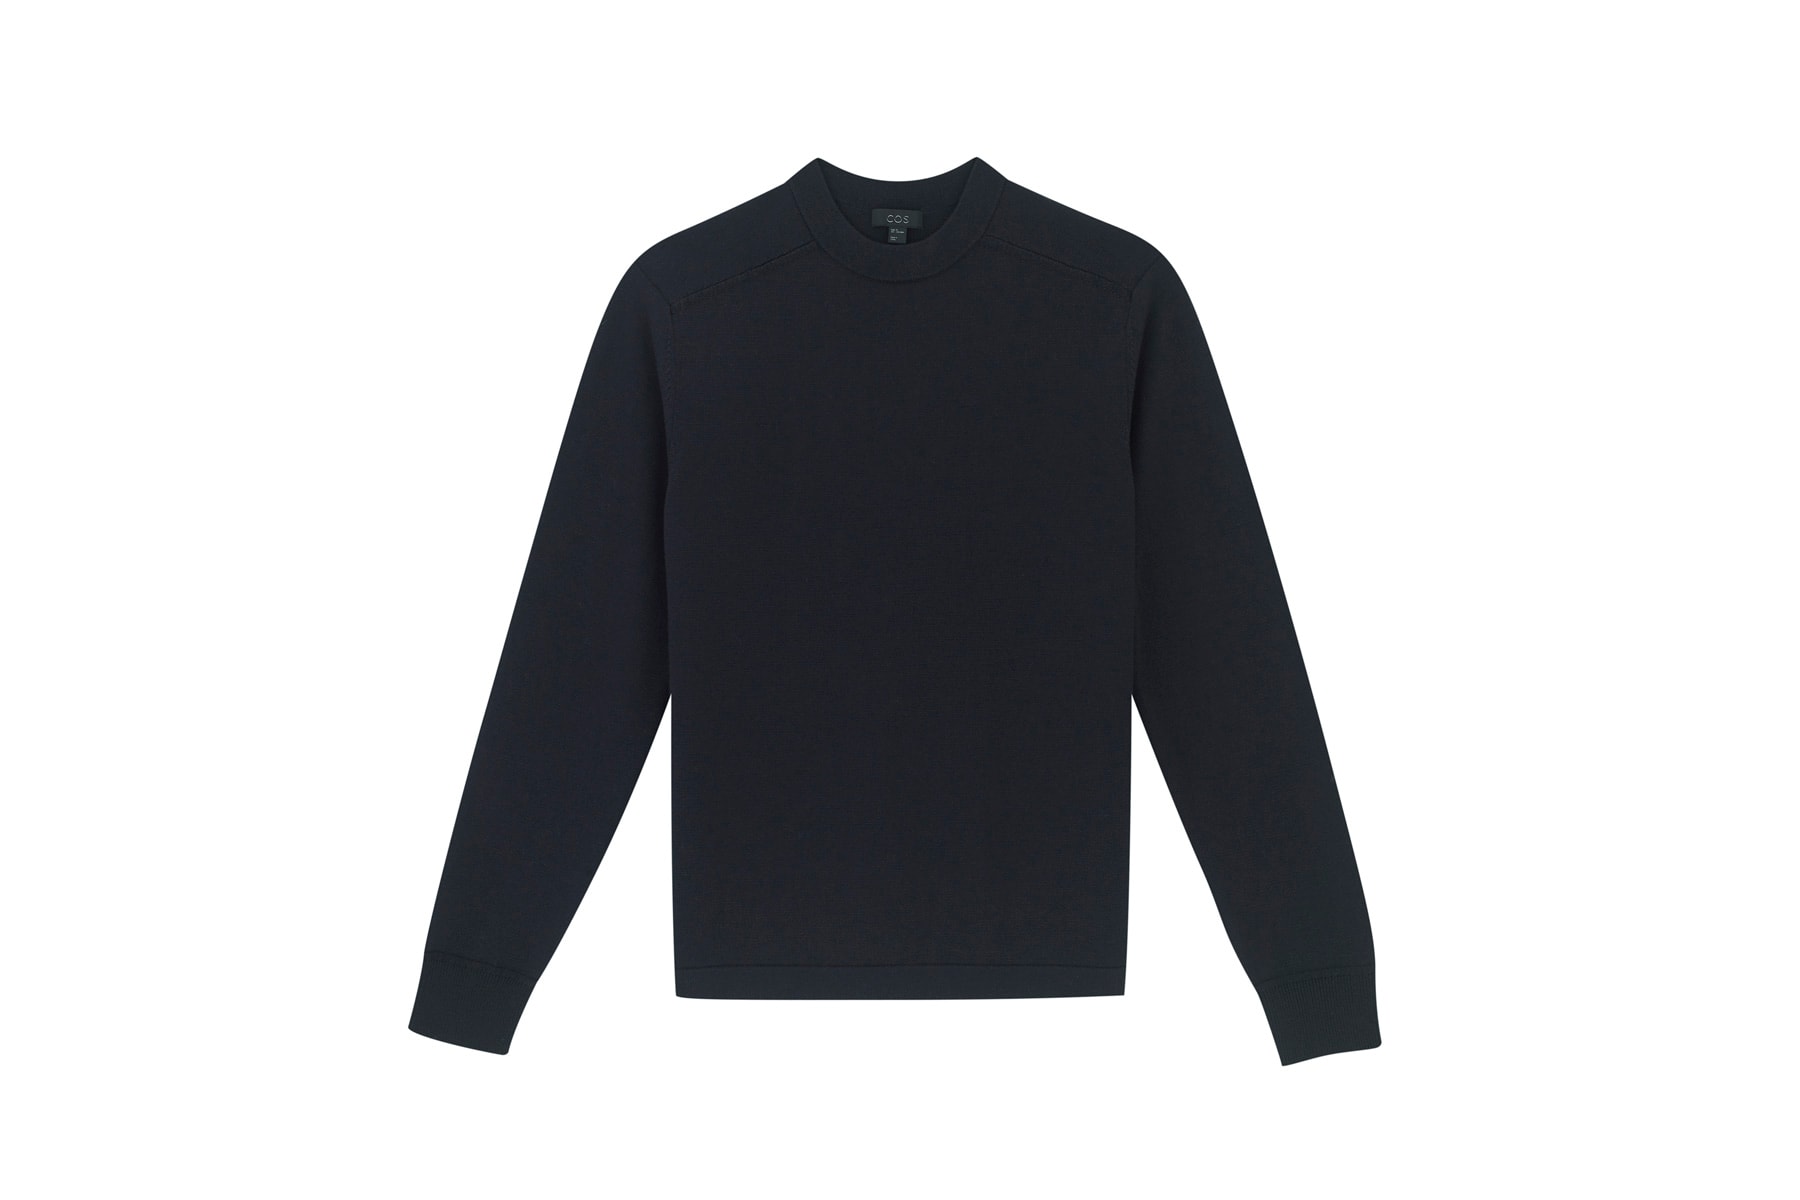 COS Soma Menswear Capsule Collection Release Date price pitti uomo 94 essential casual fashion basics blazer sweater trench coat